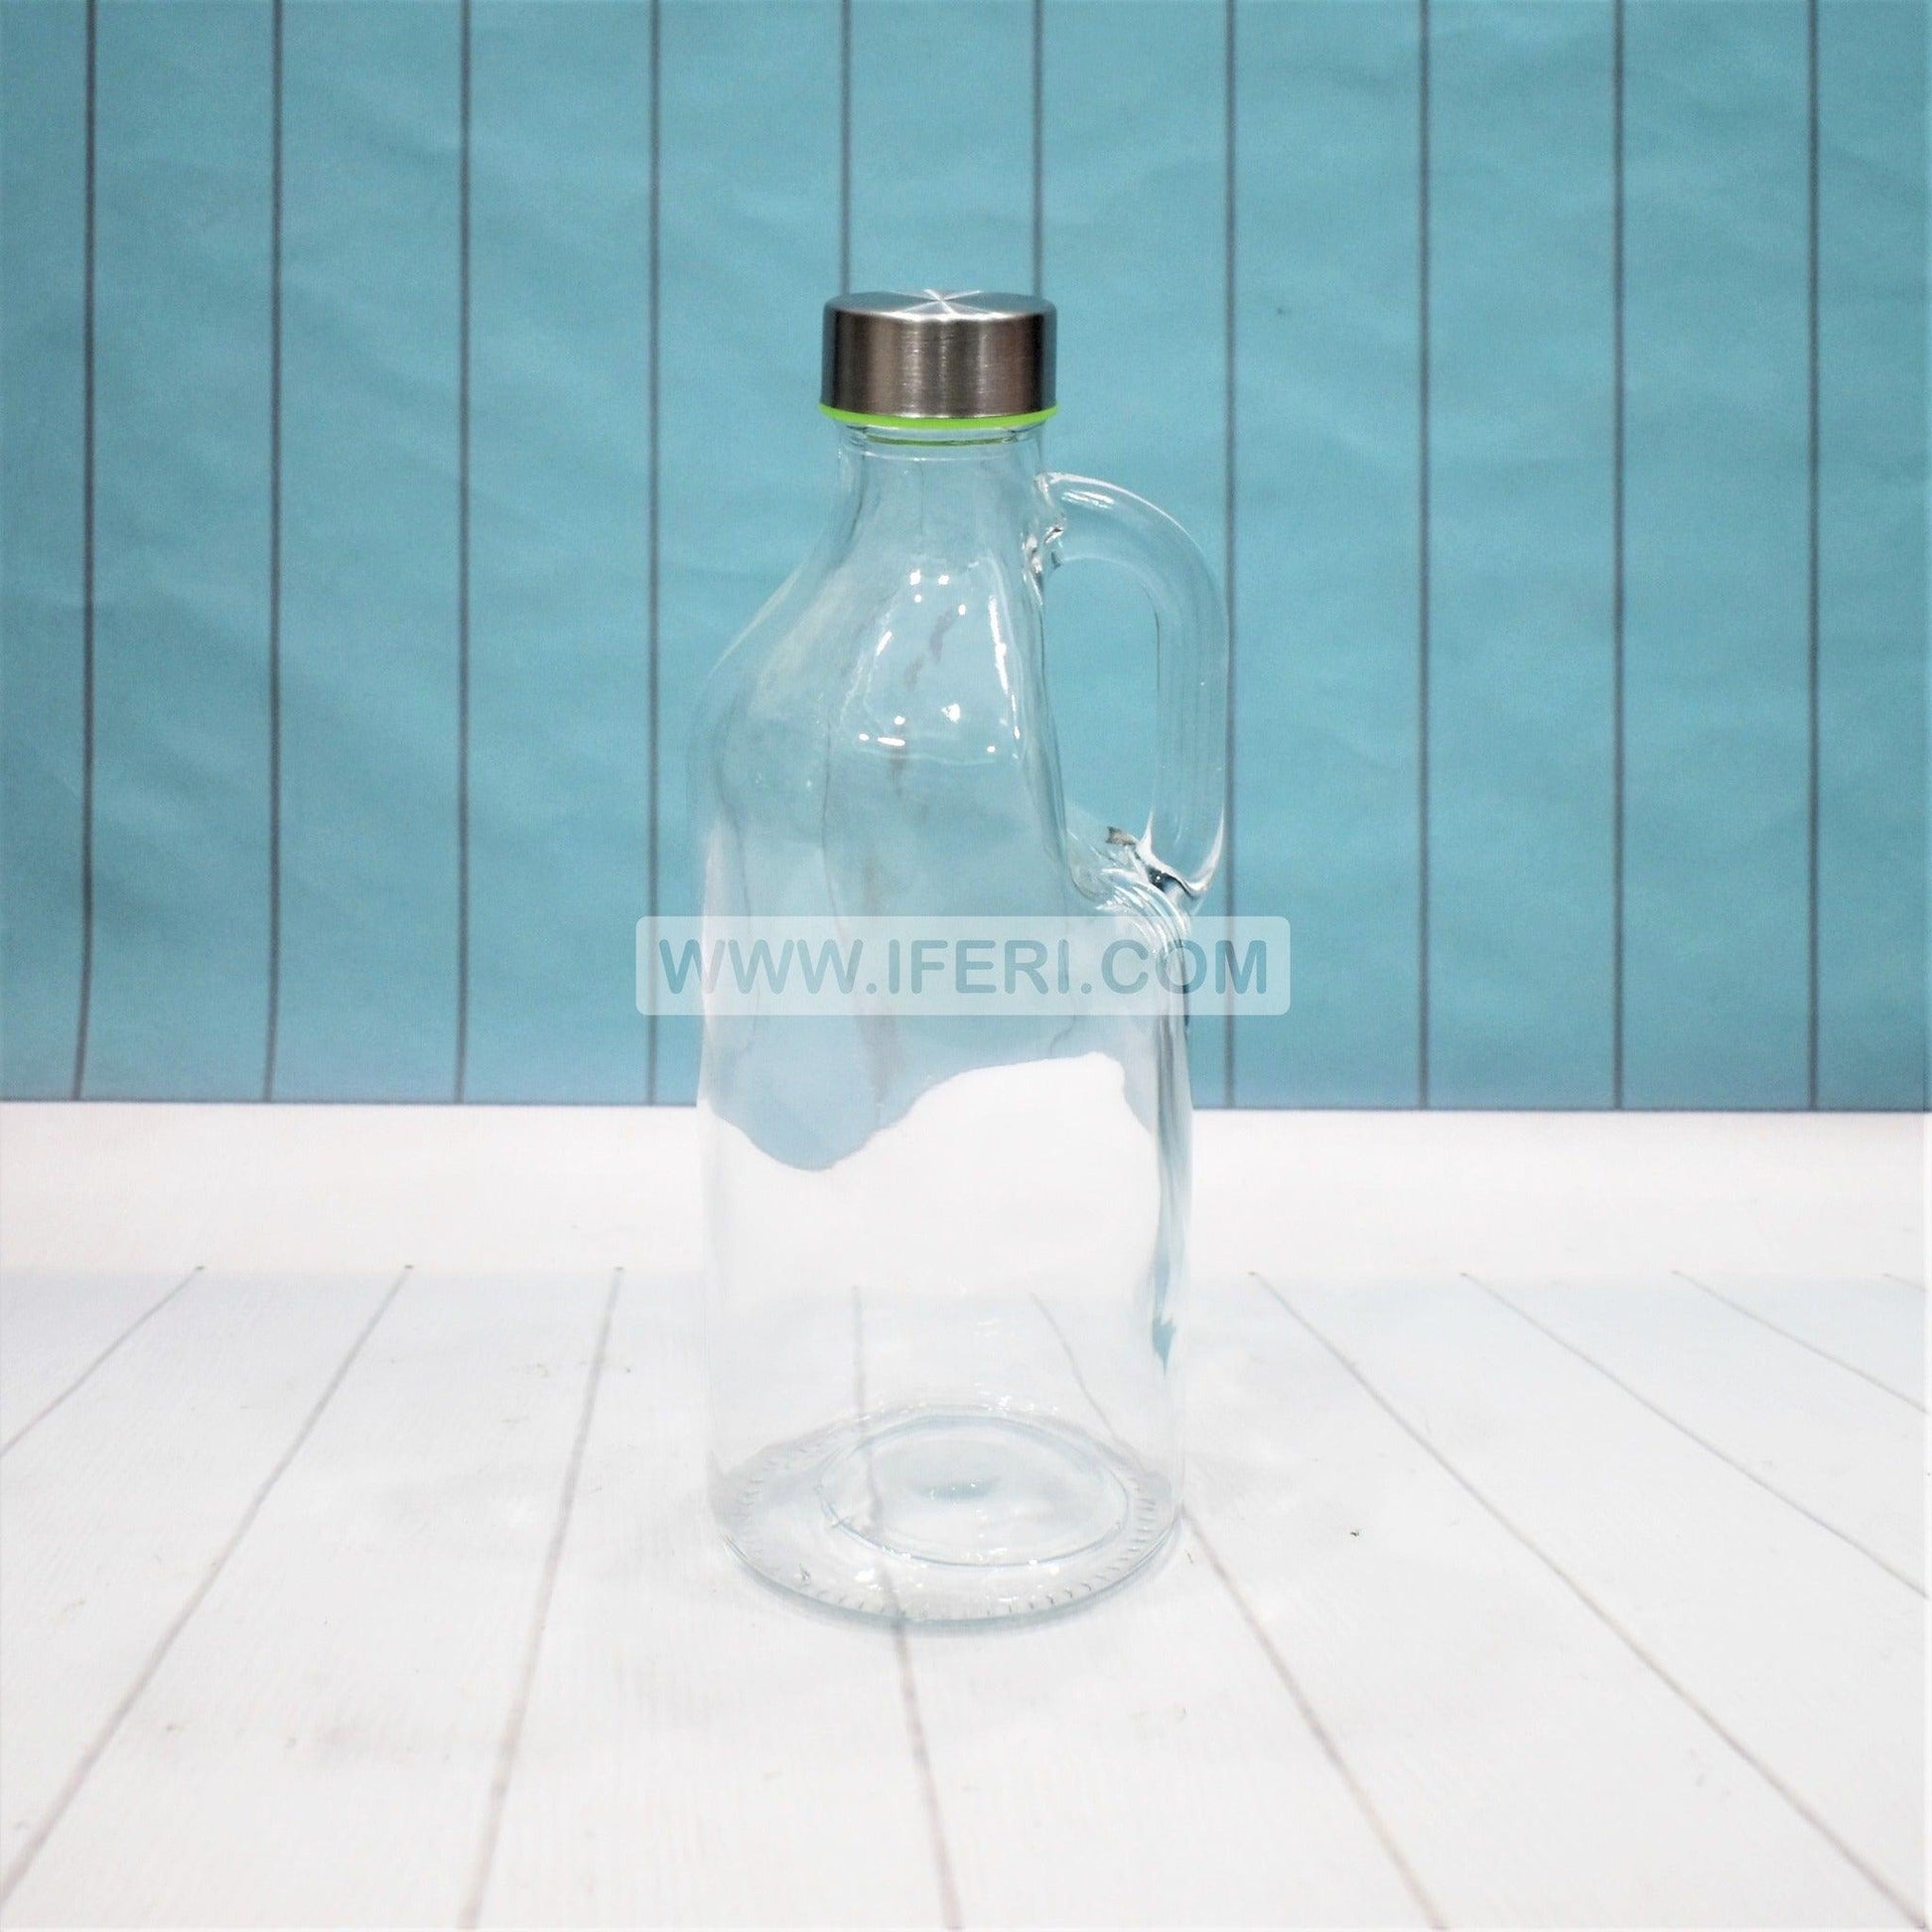 1 Liter Glass Water/Juice Bottle FT2155 Price in Bangladesh - iferi.com